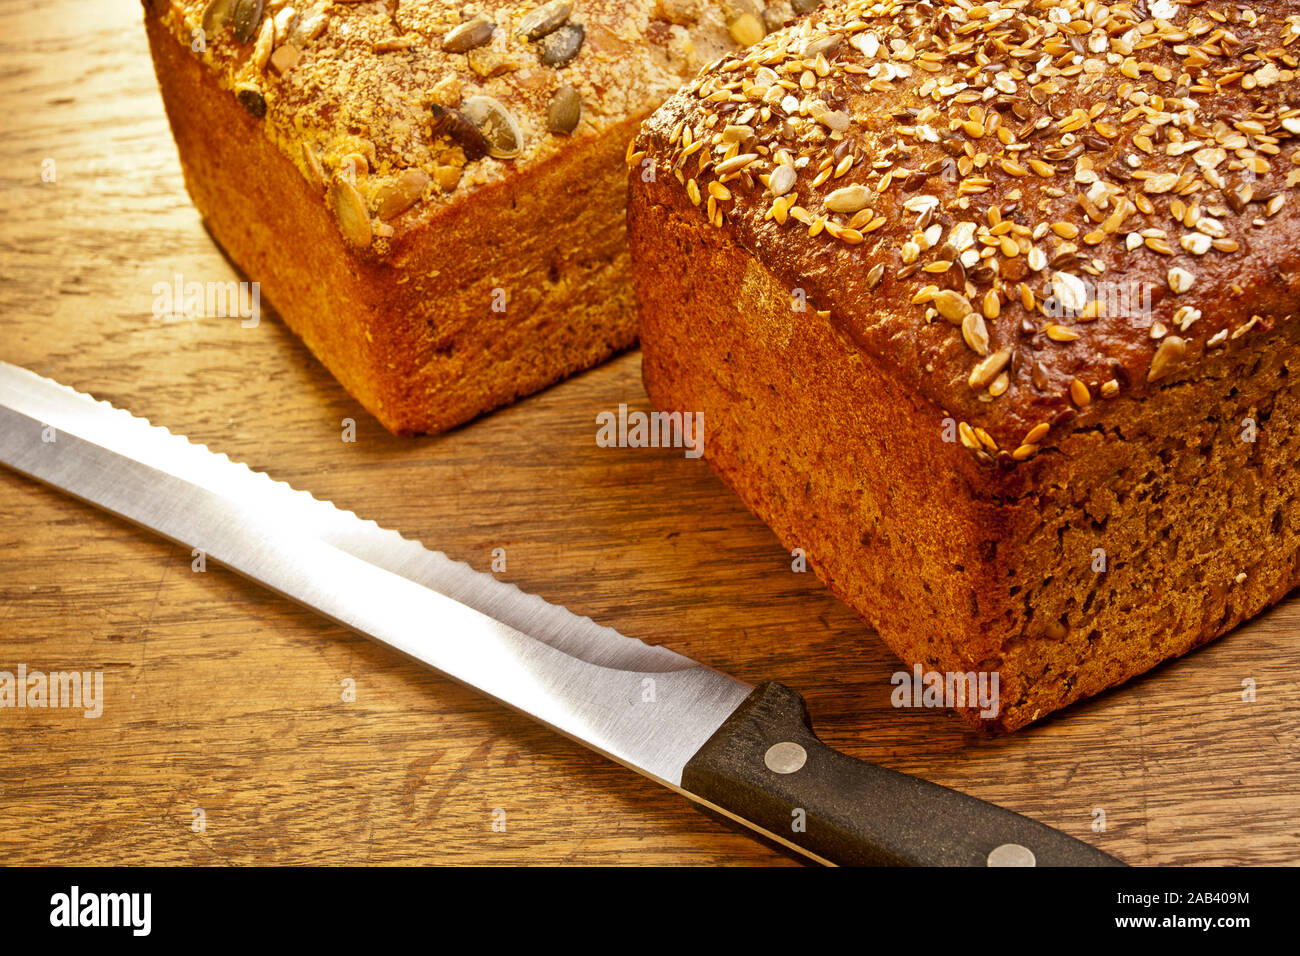 Mehrkornbrot und Kürbiskernbrot Mit einem Brotmesser auf einer Tischplatte |Multi-pane di grano e il pane di zucca con un coltello per pane su un tavolo| Foto Stock